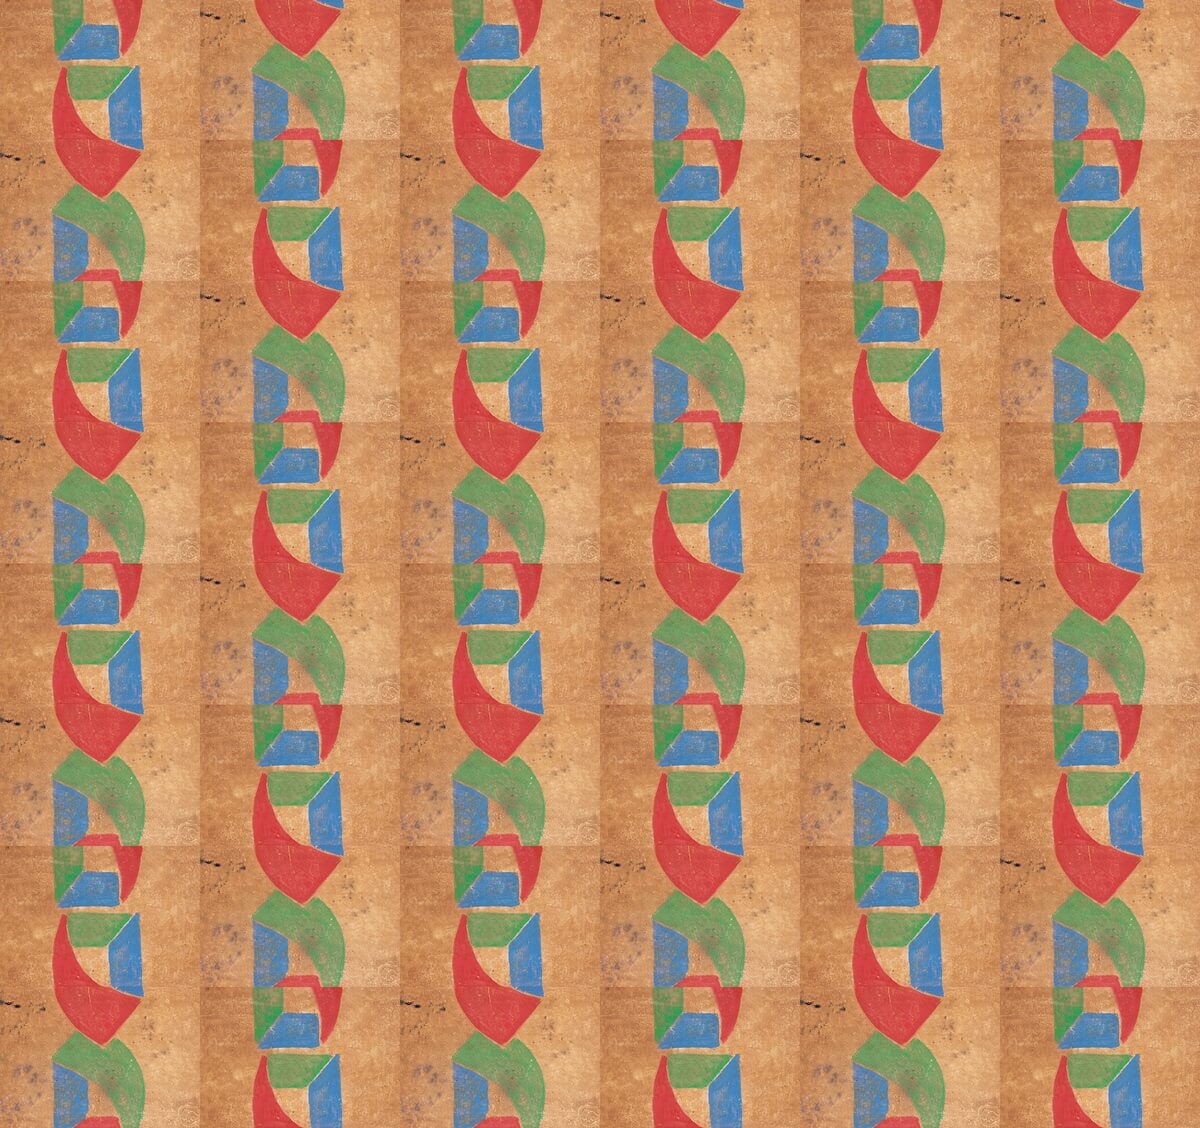 Werkstatte I pattern in orange, blue, red, and green